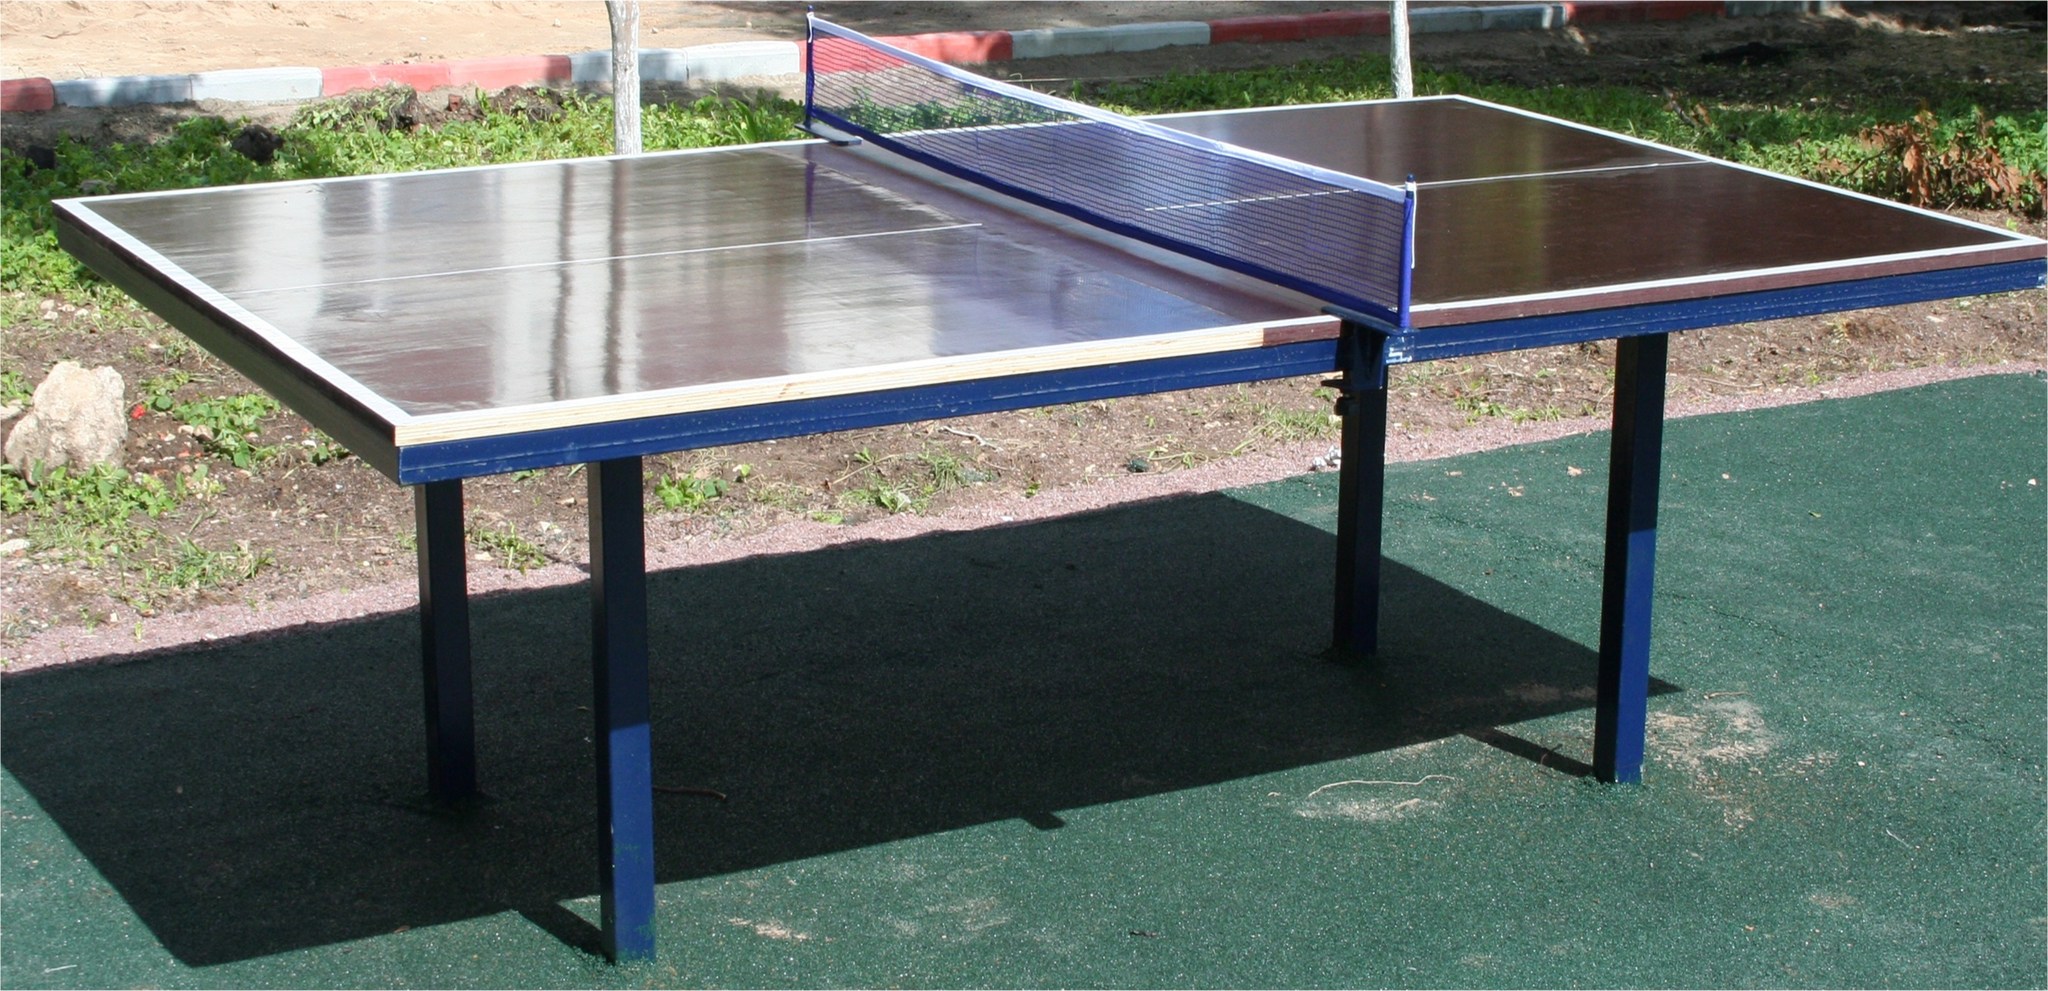 размер теннисного стола для дома